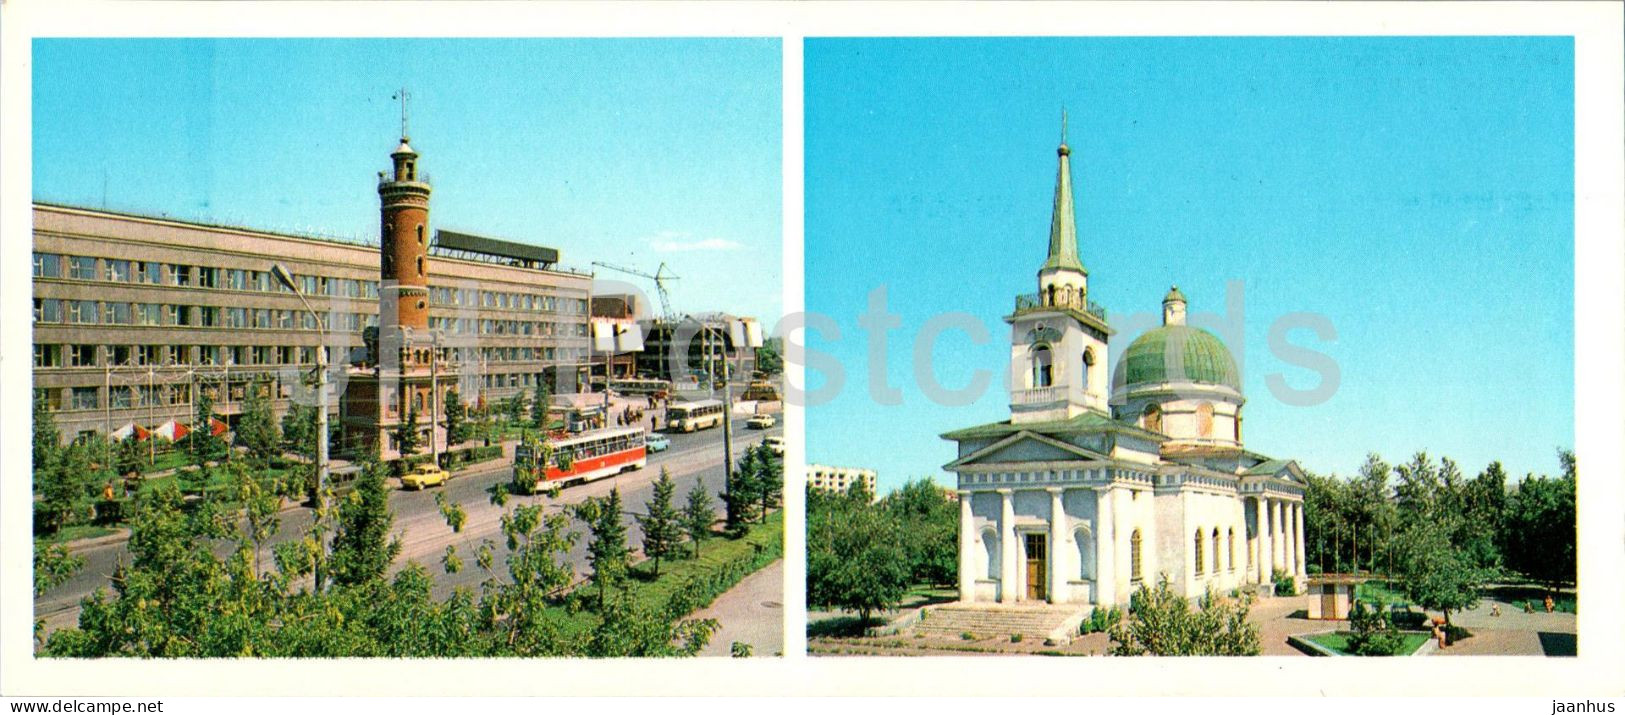 Omsk - Main Post Office - Nikolsky Cathedral - Tram - 1982 - Russia USSR - Unused - Rusland